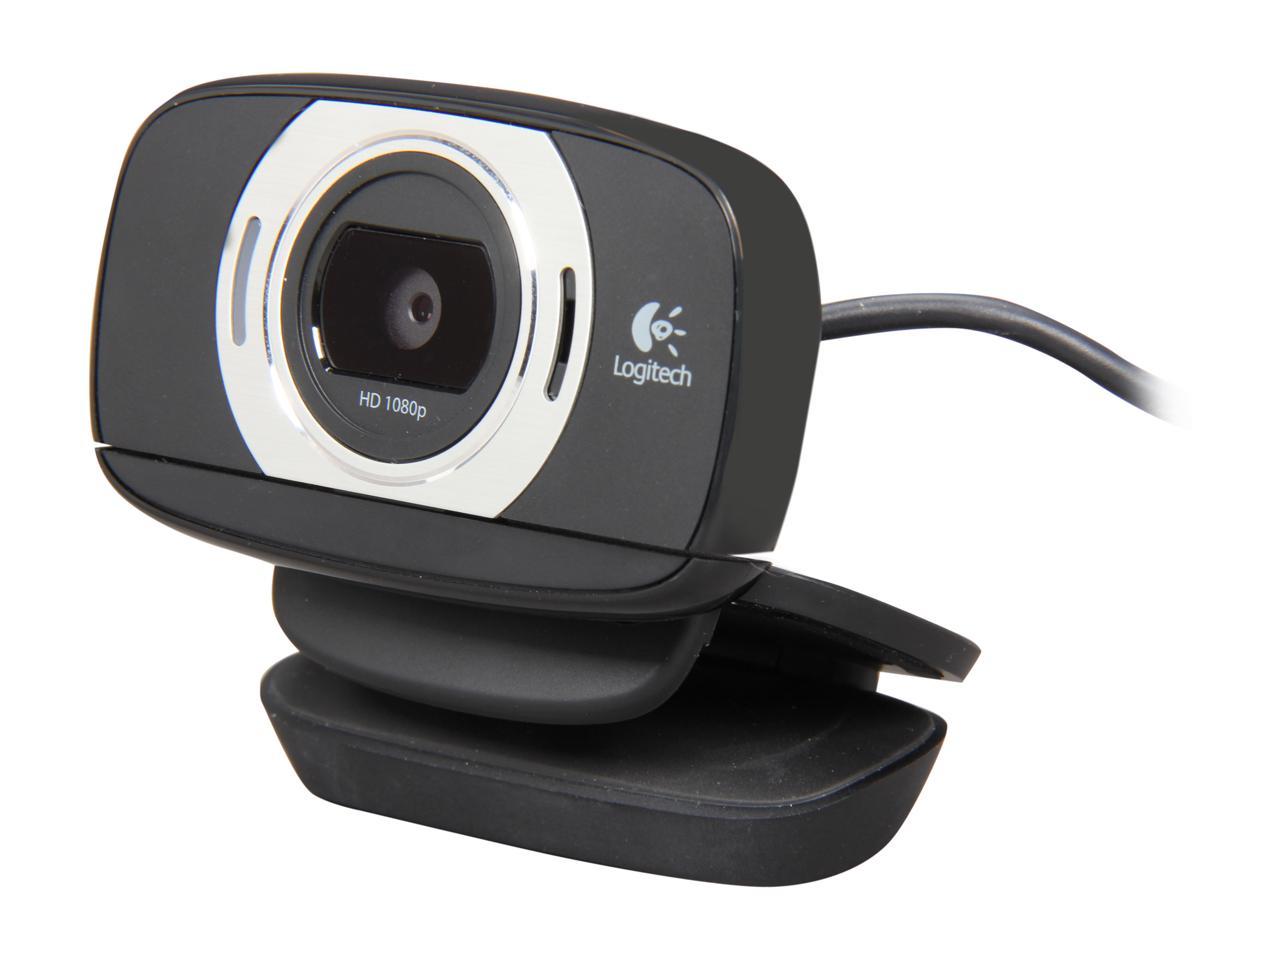 C615 WebCam for VoIP, Skype and video conference Newegg.com